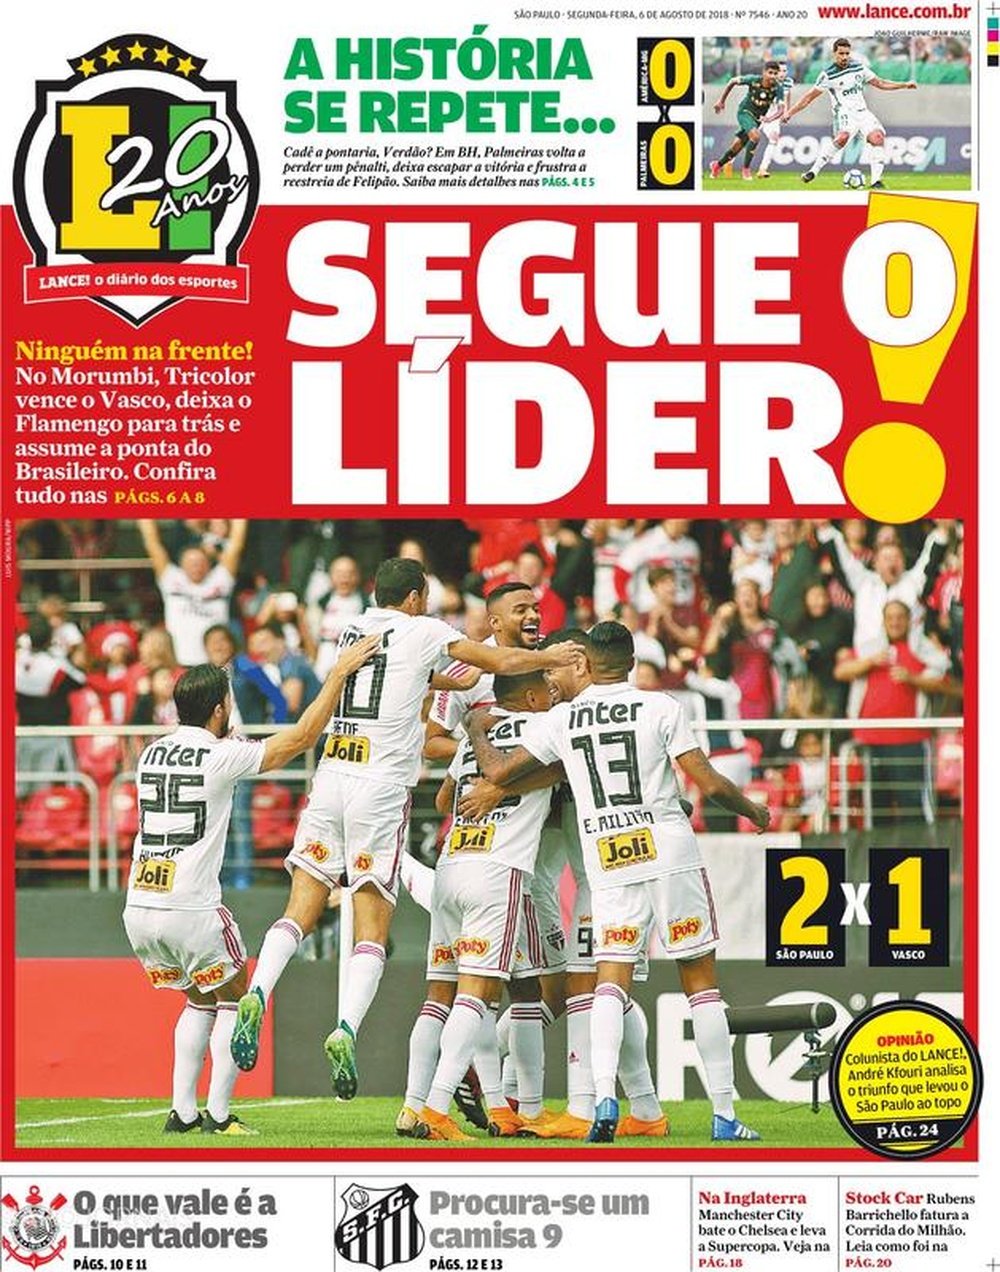 Capa do jornal 'Lance - São Paulo' de 06-08-18. Lance - São Paulo